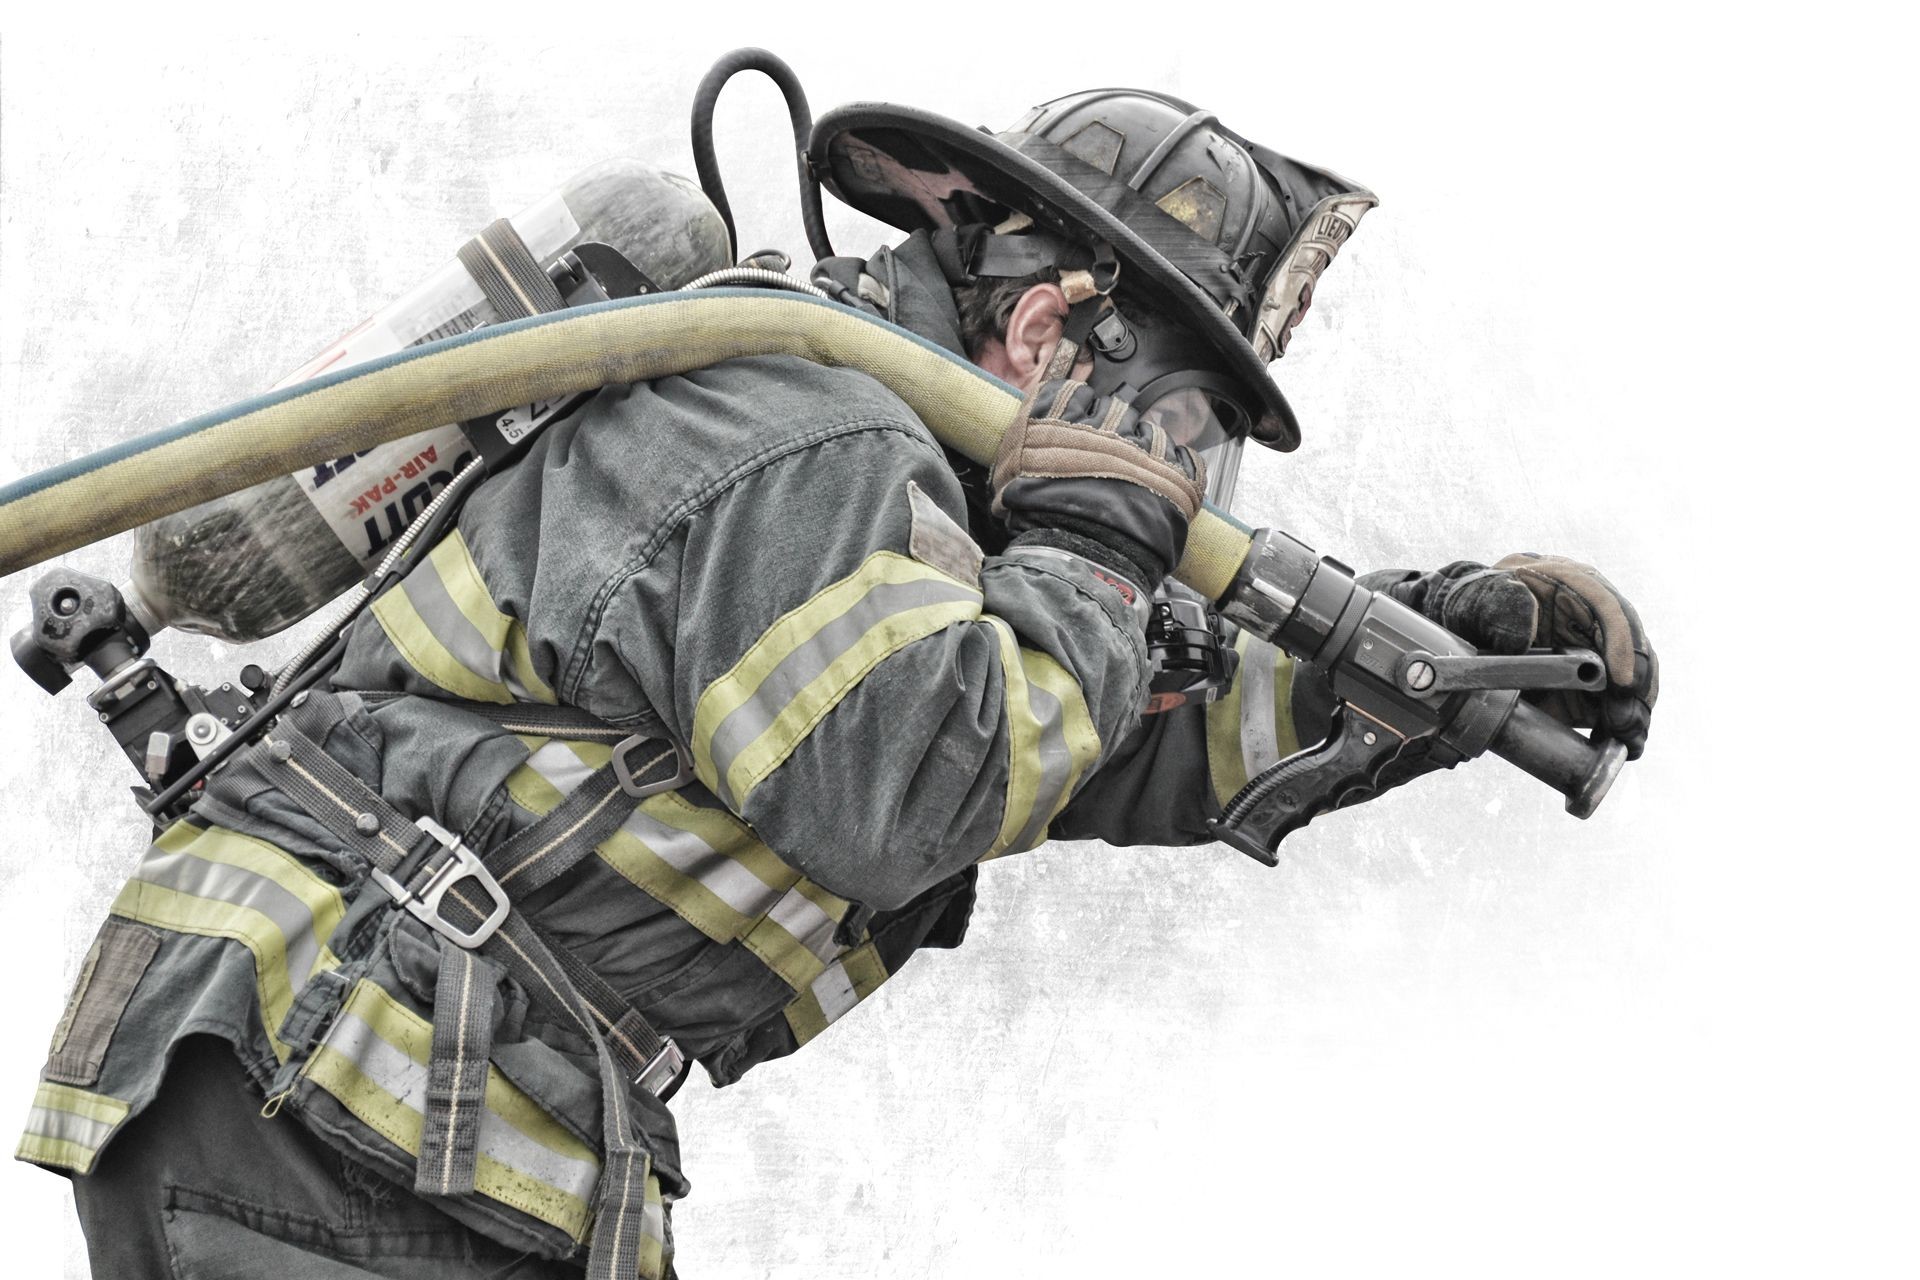 46 Firefighter Wallpaper  WallpaperSafari